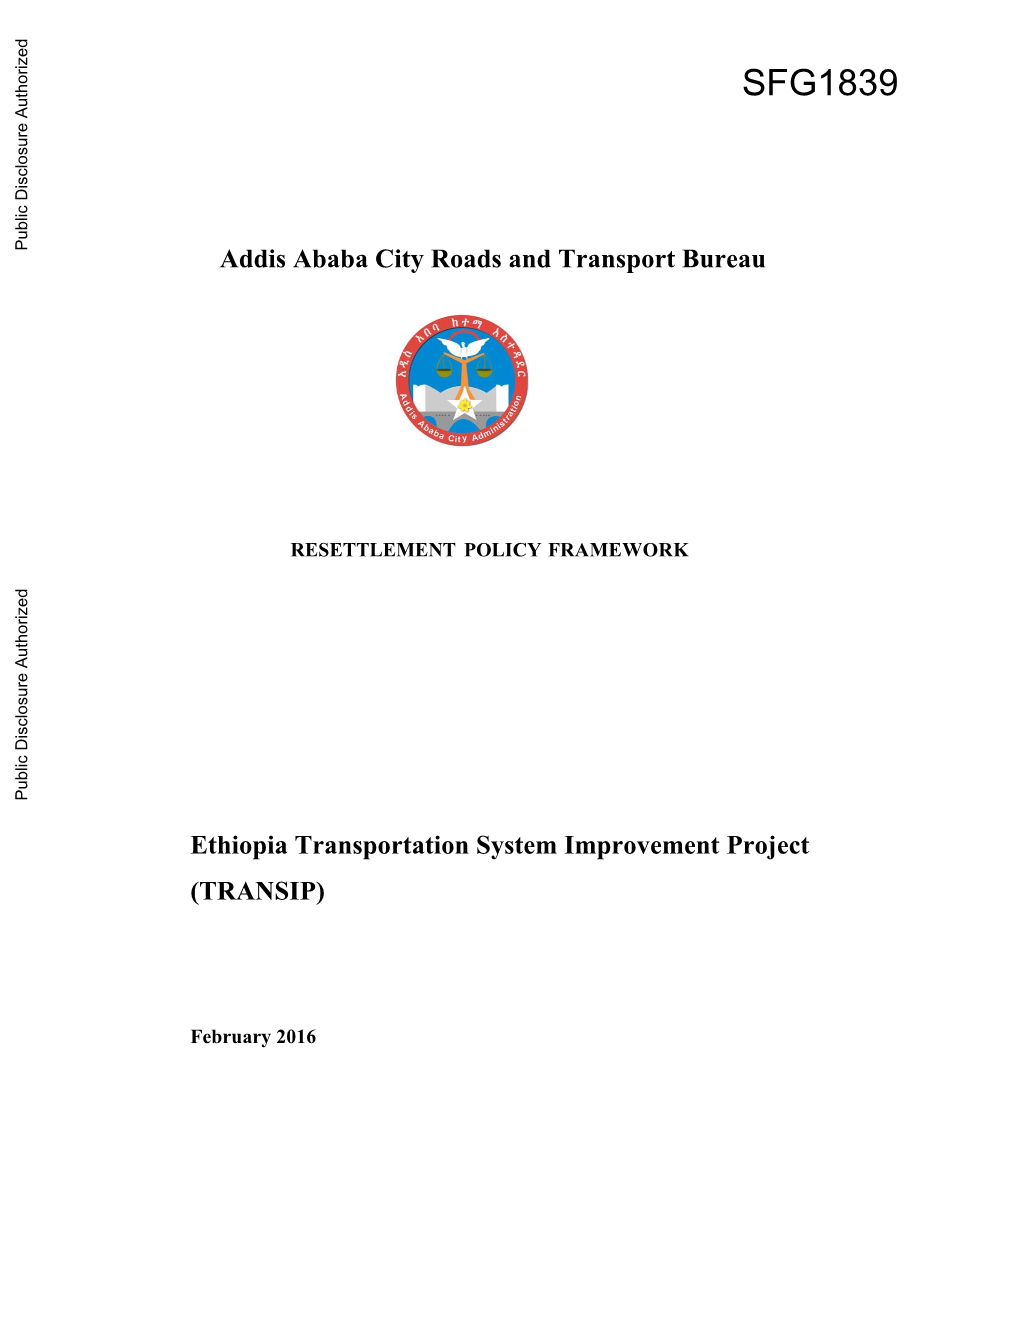 Addis Ababa City Roads and Transport Bureau